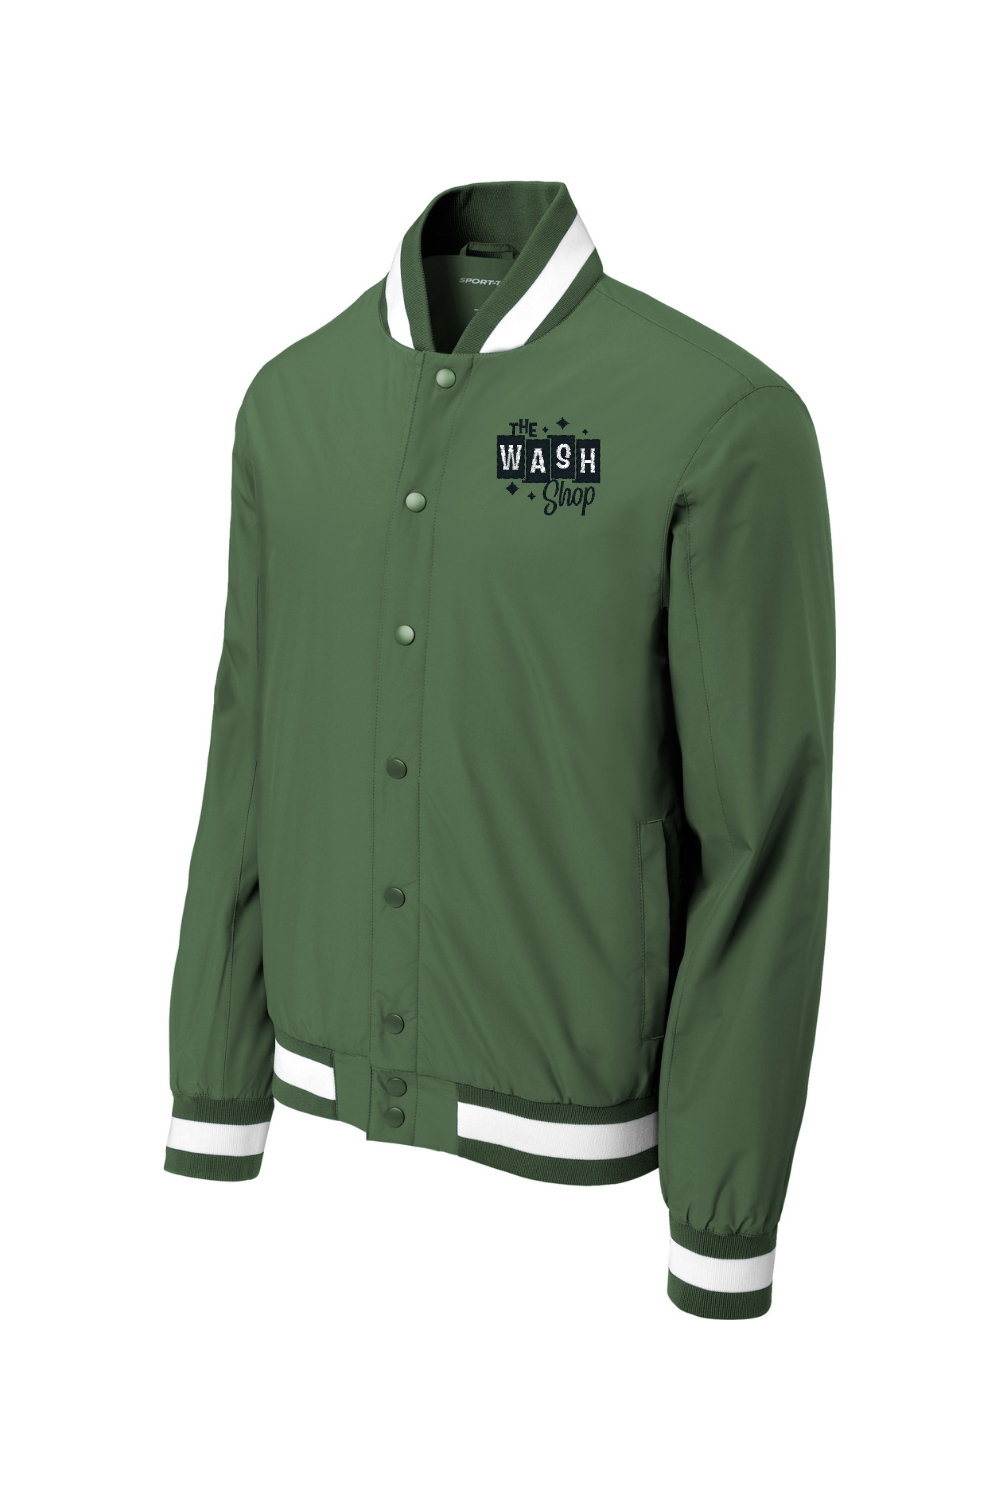 Men's Insulated Varsity Jacket - The Wash Shop